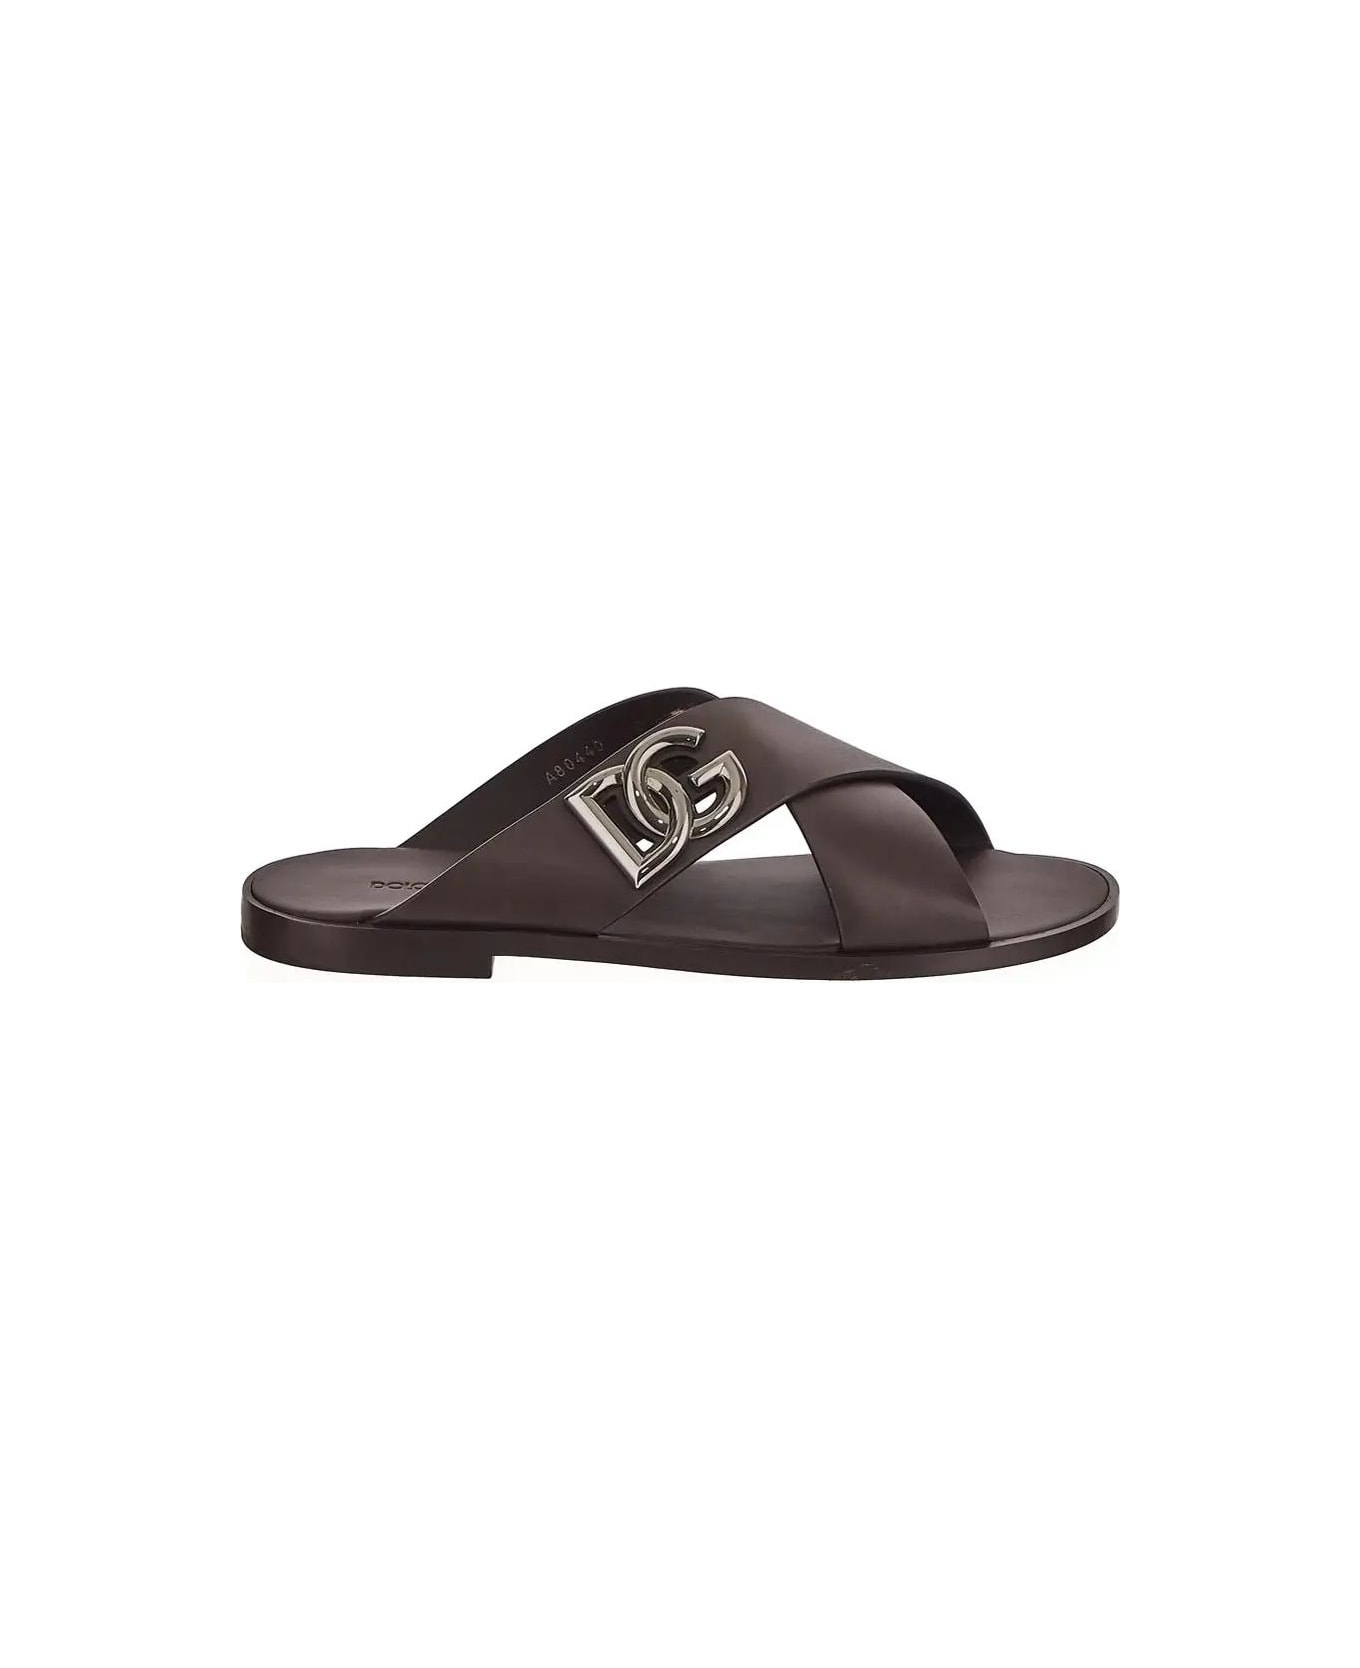 Dolce & Gabbana Leather Sandals - Brown